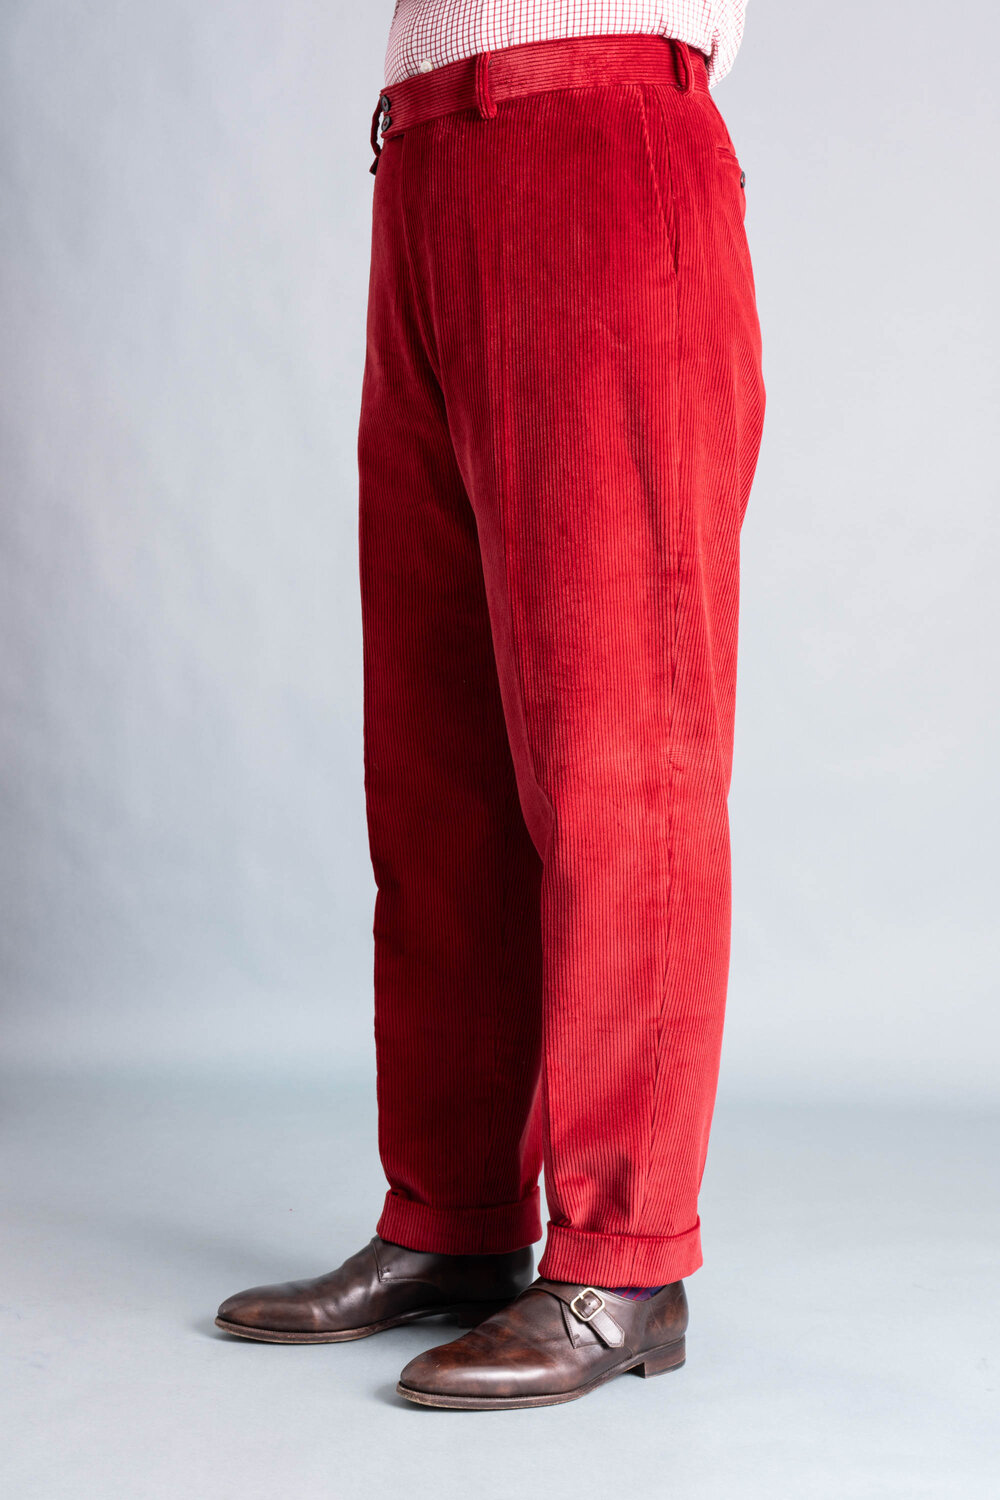 Khaki Drab Corduroy Trousers - Stancliffe Flat-Front in 8-Wale Cotton